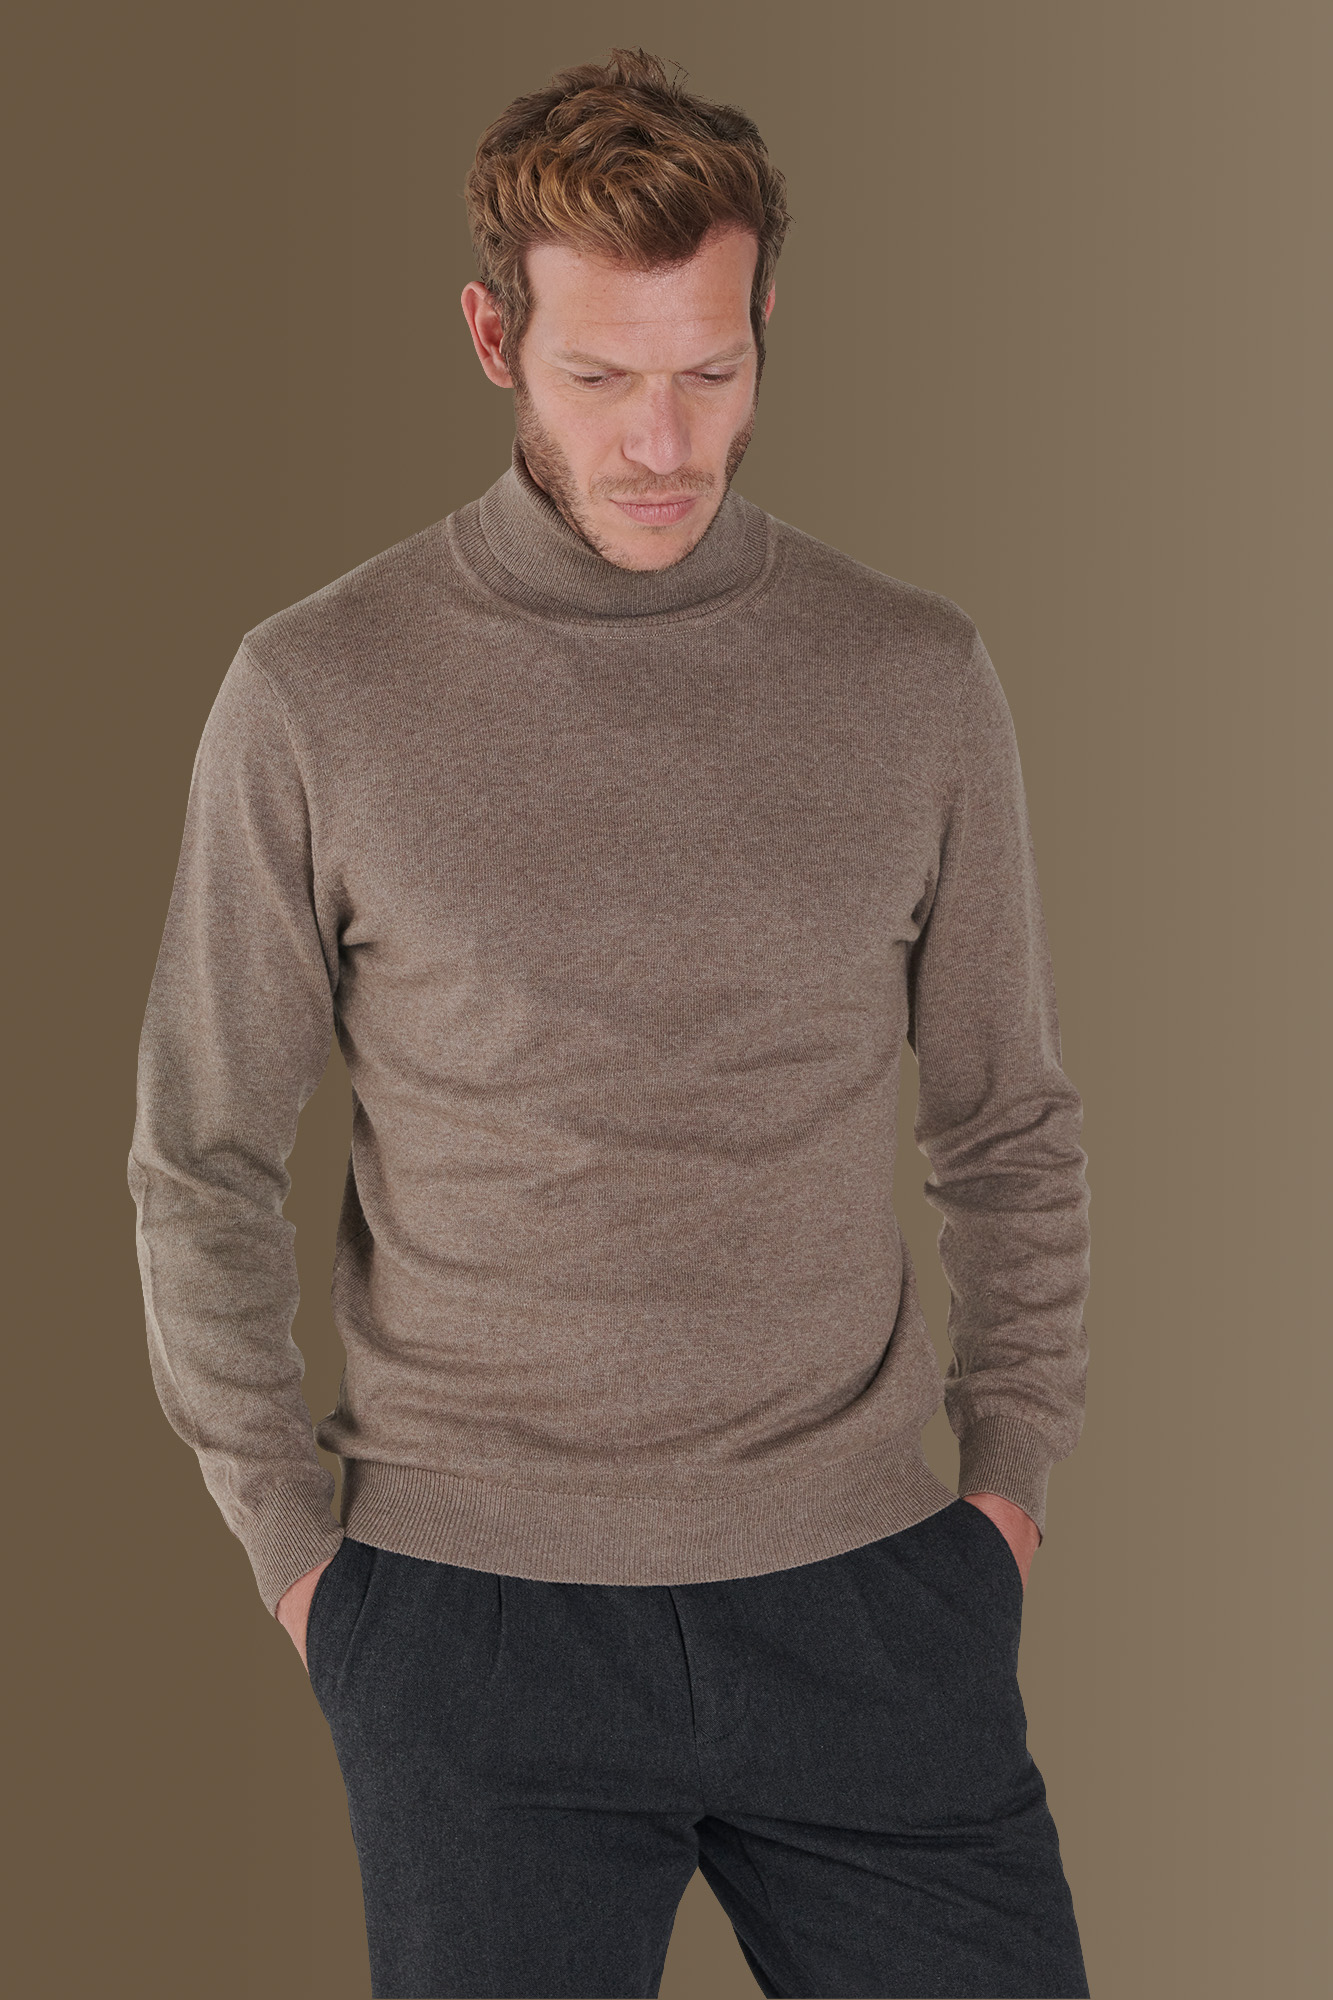 Turtleneck sweater in cotton- wool blend